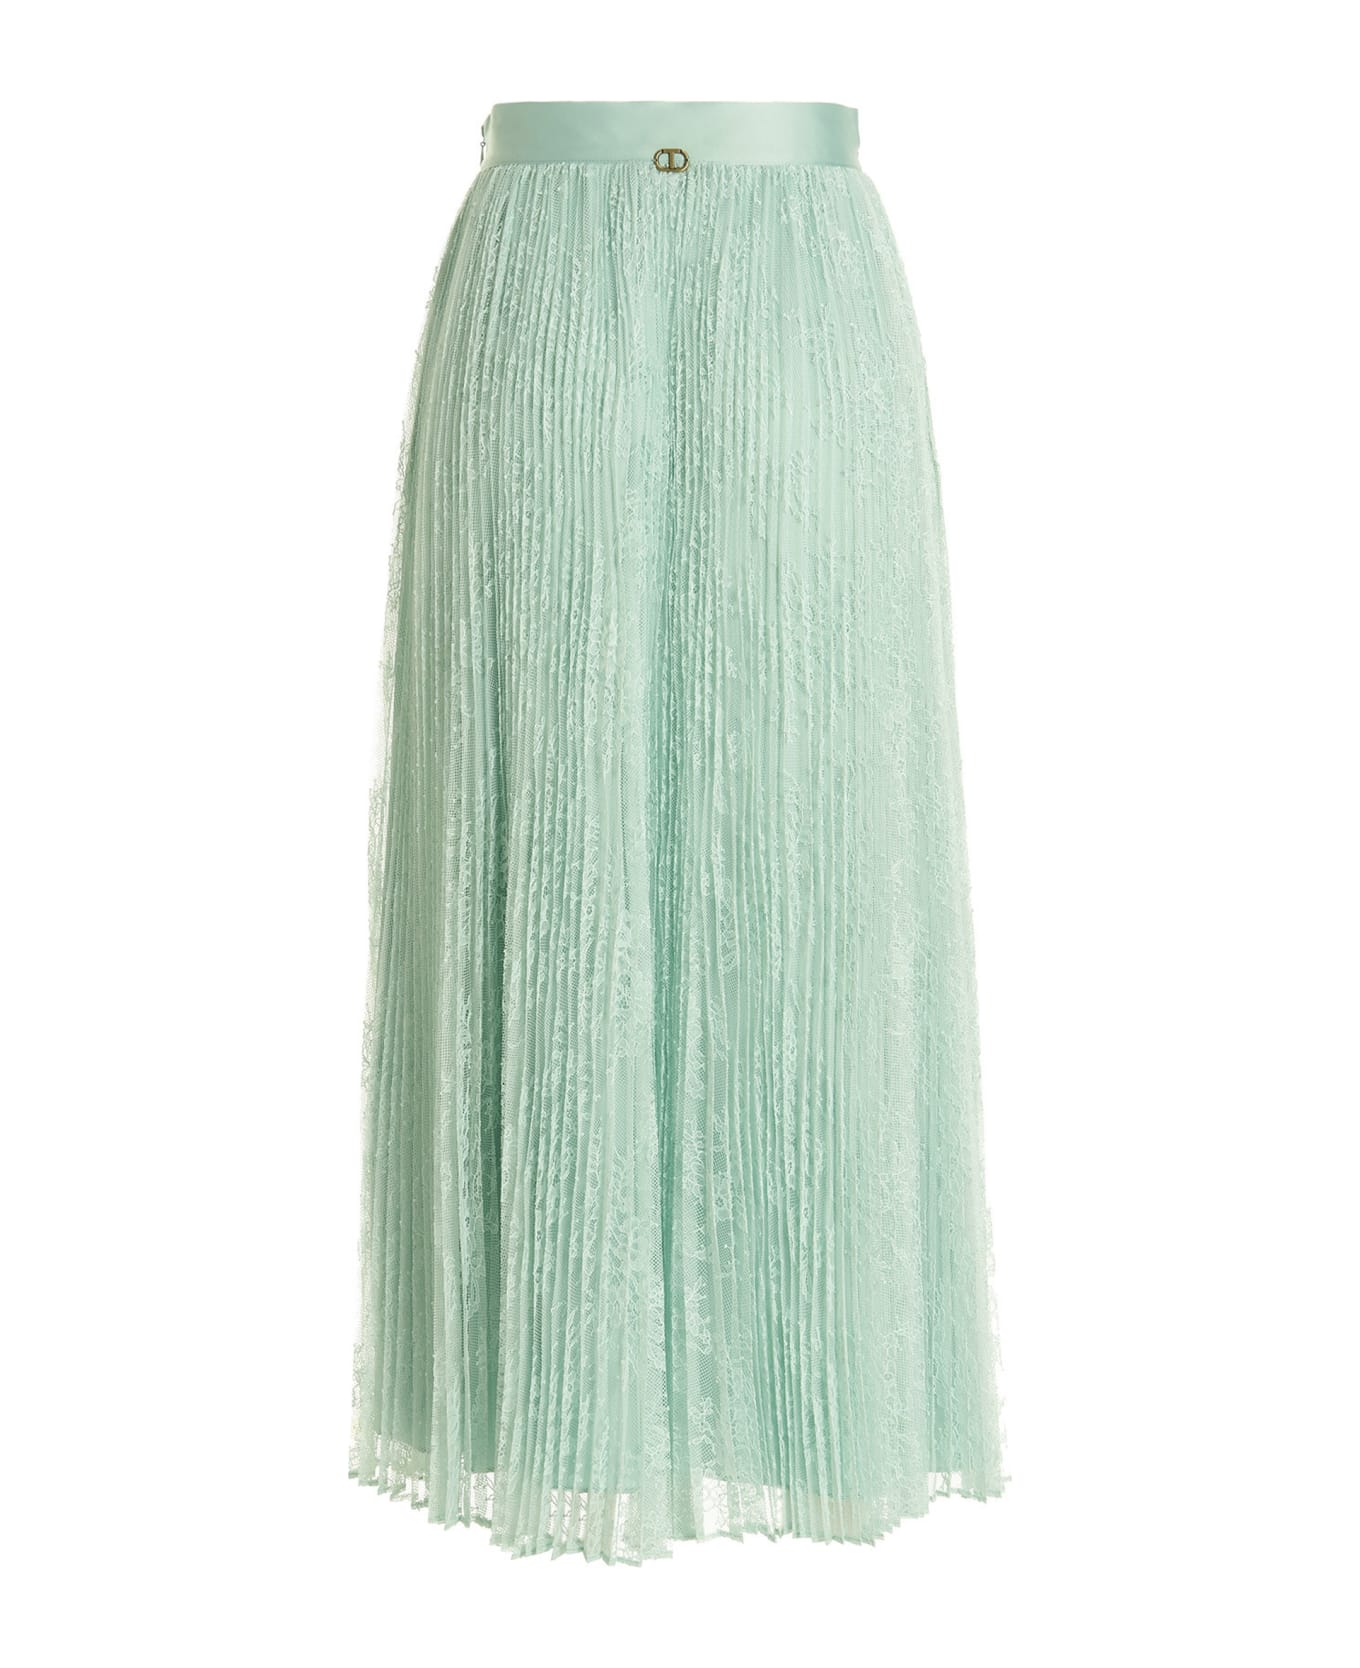 TwinSet Lace Skirt - Mint